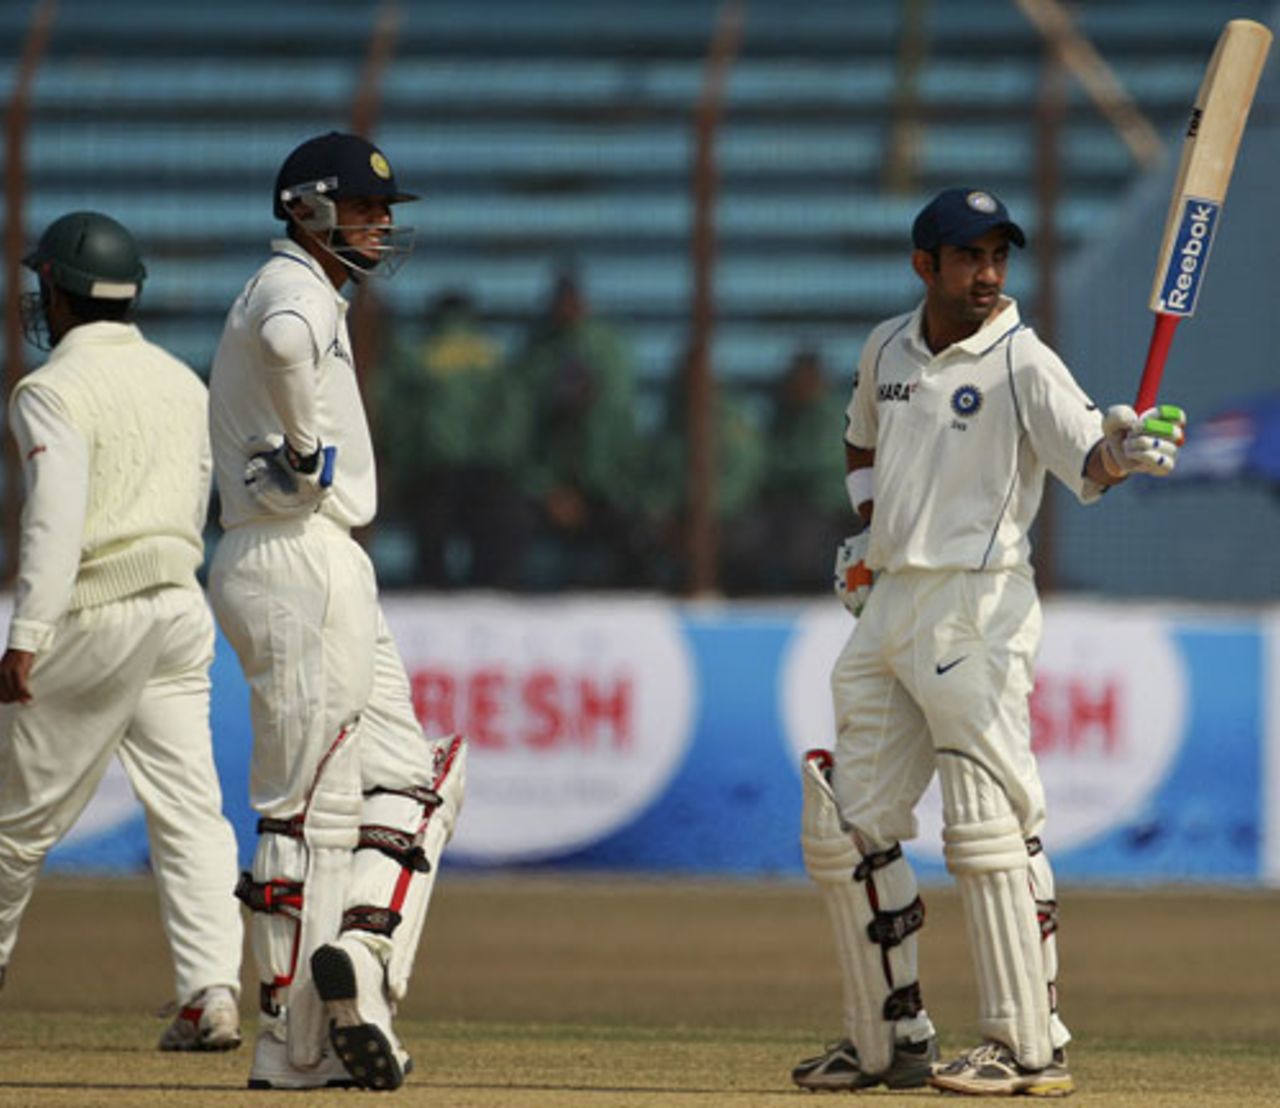 Gautam Gambhir acknowledges the cheers on reaching his hundred, Bangladesh v India, 1st Test, Chittagong, 4th day, January 20, 2010 